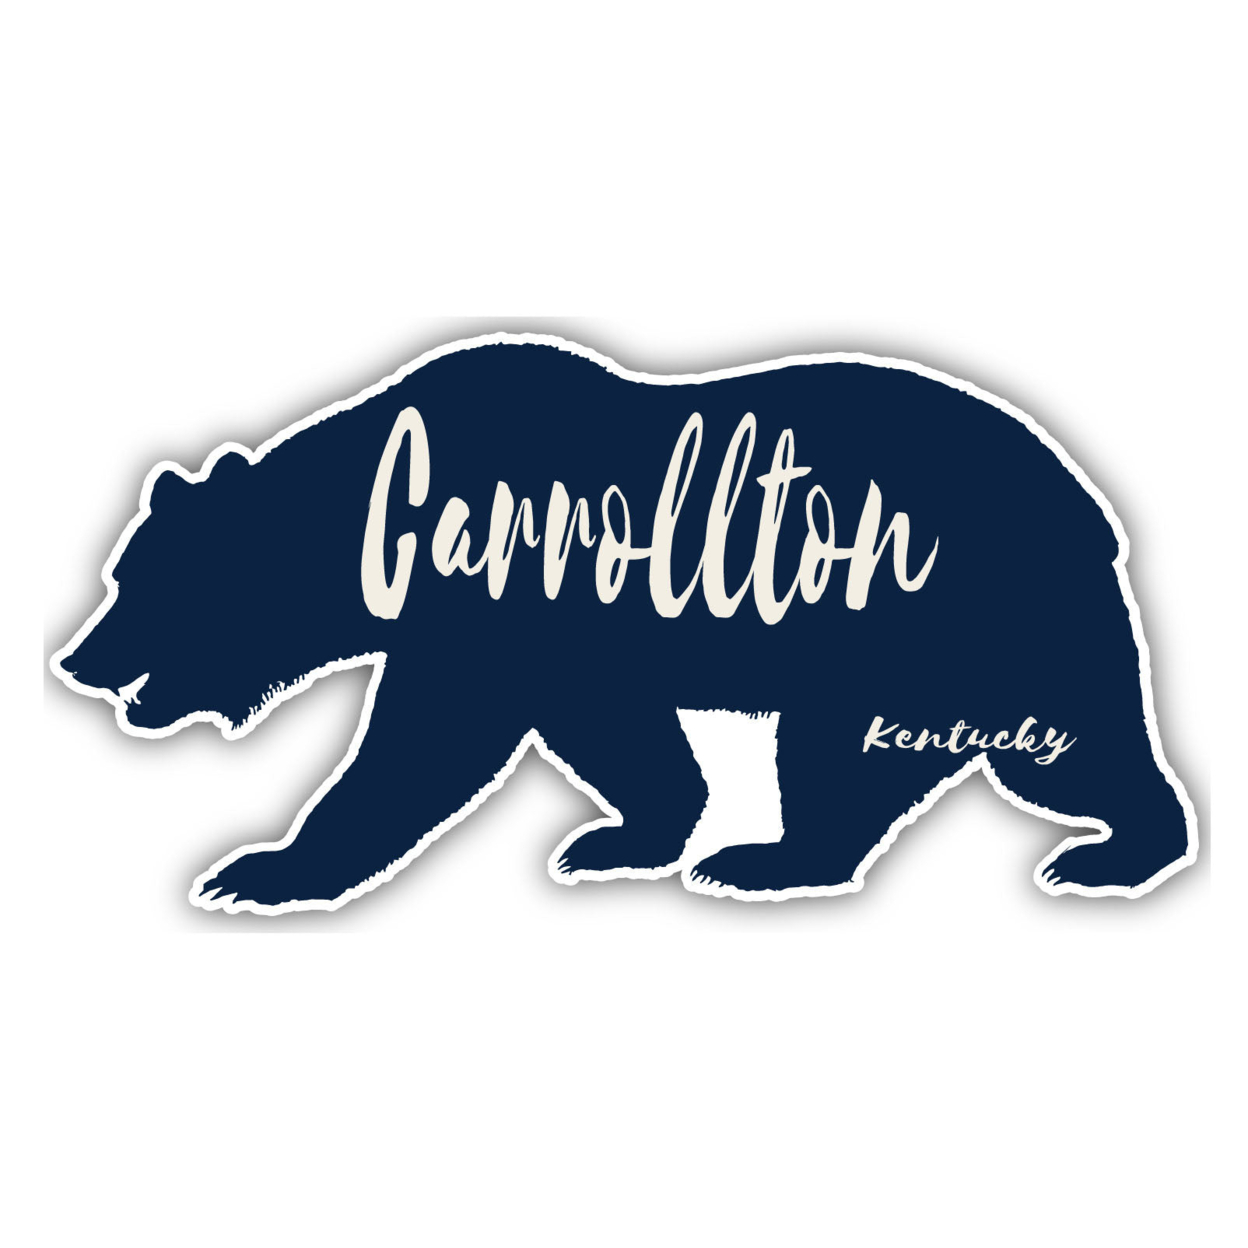 Carrollton Kentucky Souvenir Decorative Stickers (Choose Theme And Size) - Single Unit, 8-Inch, Great Outdoors